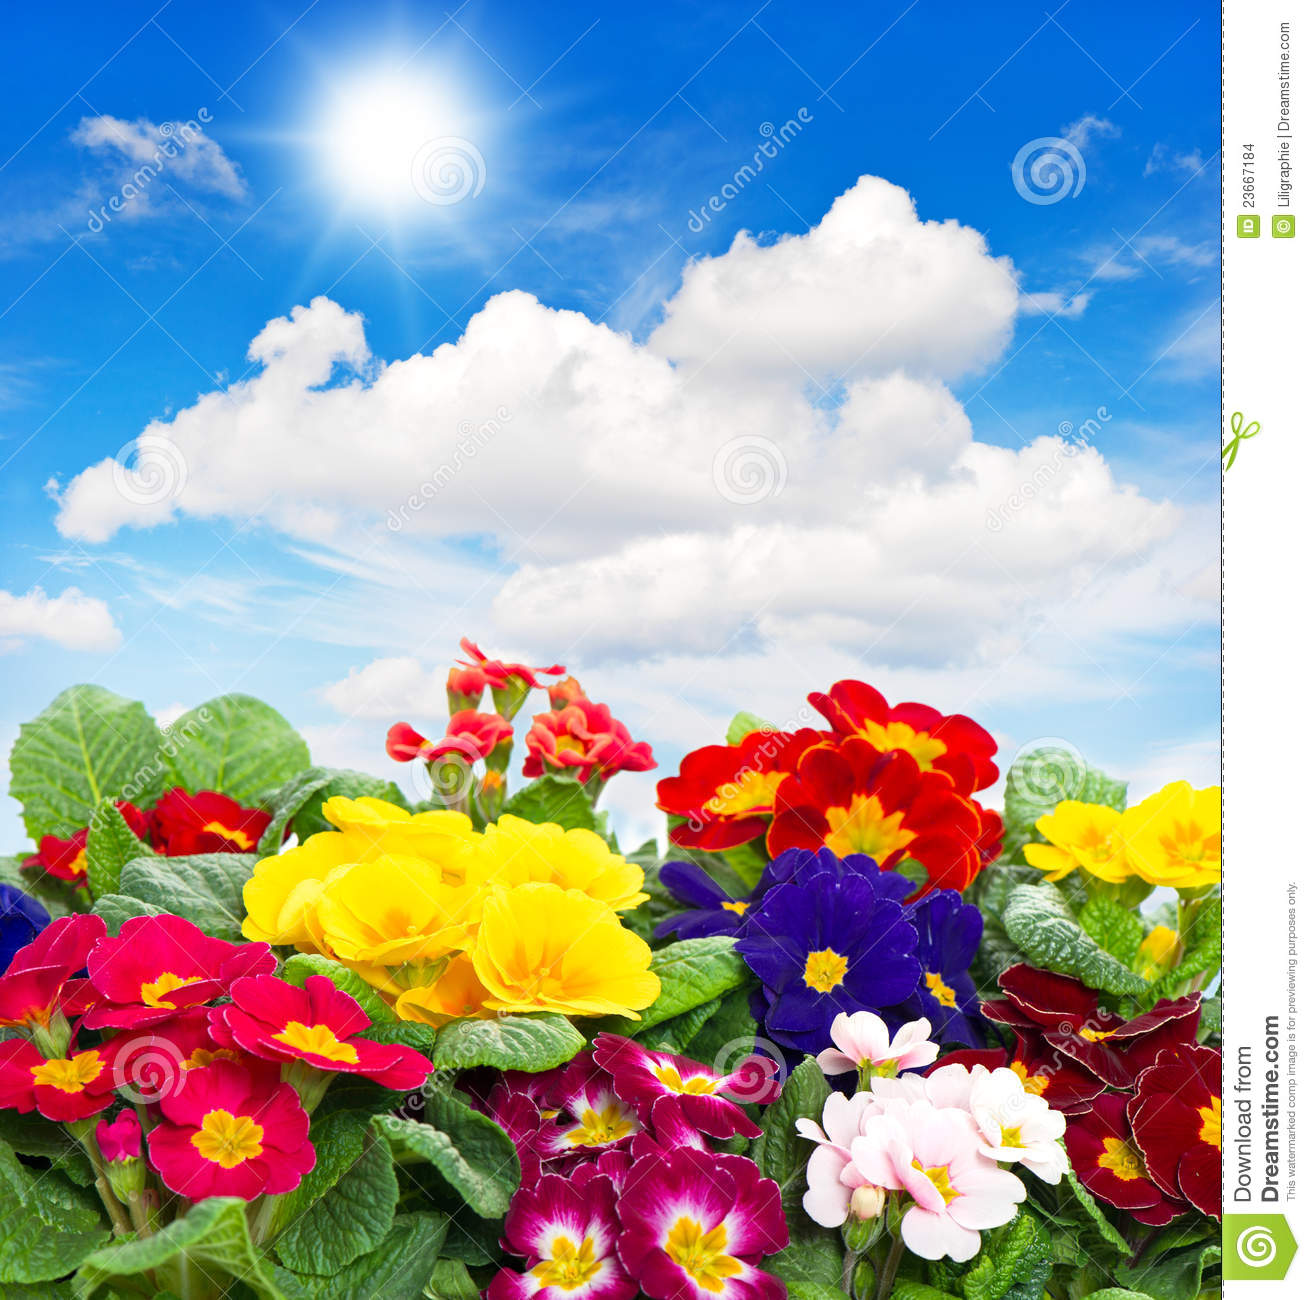 Primula Flowers On Blue Sky Background Stock Images   Image  23667184